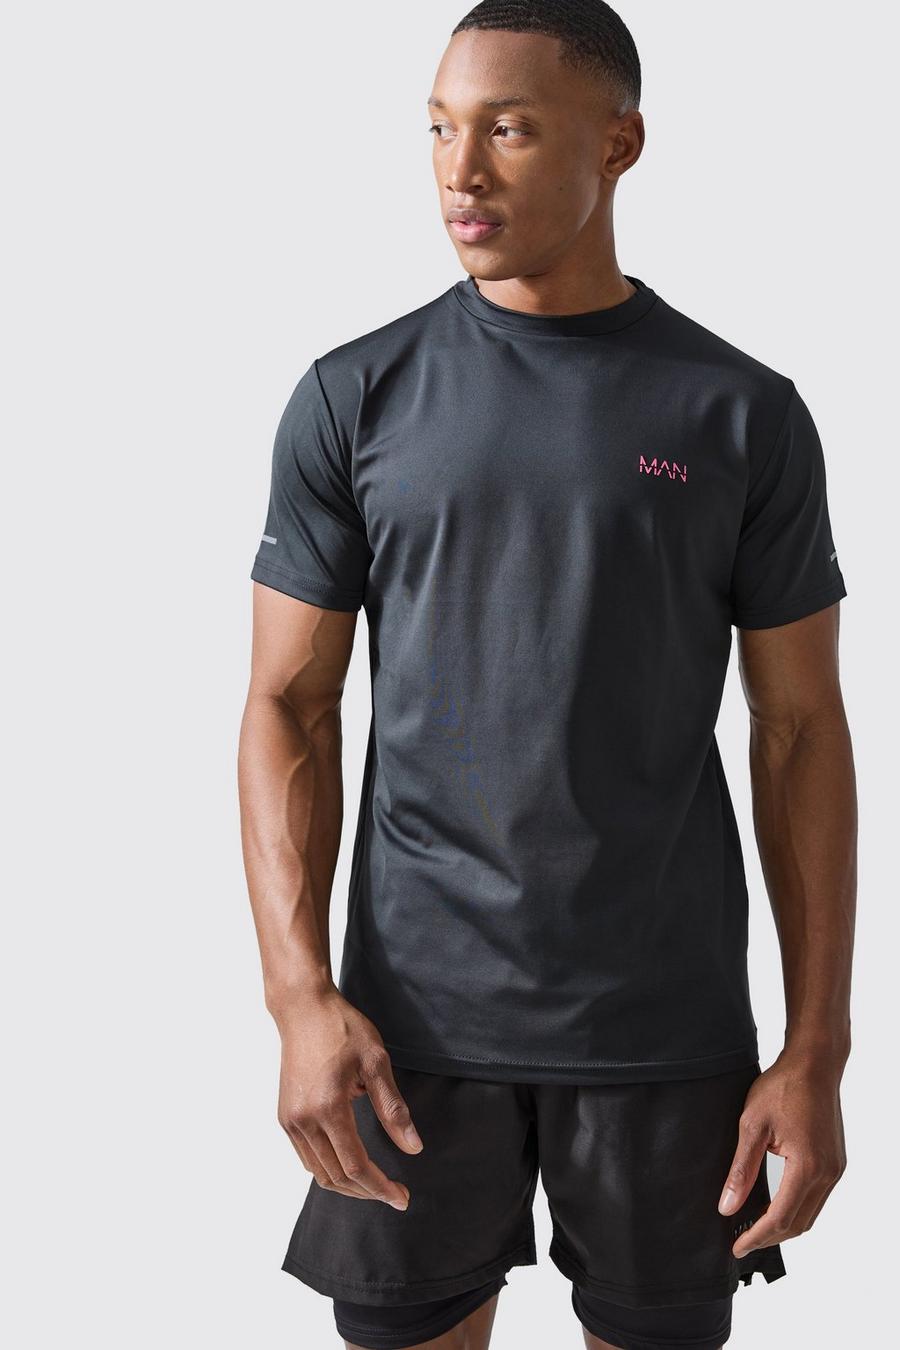 Man Active Performance T-Shirt, Black image number 1